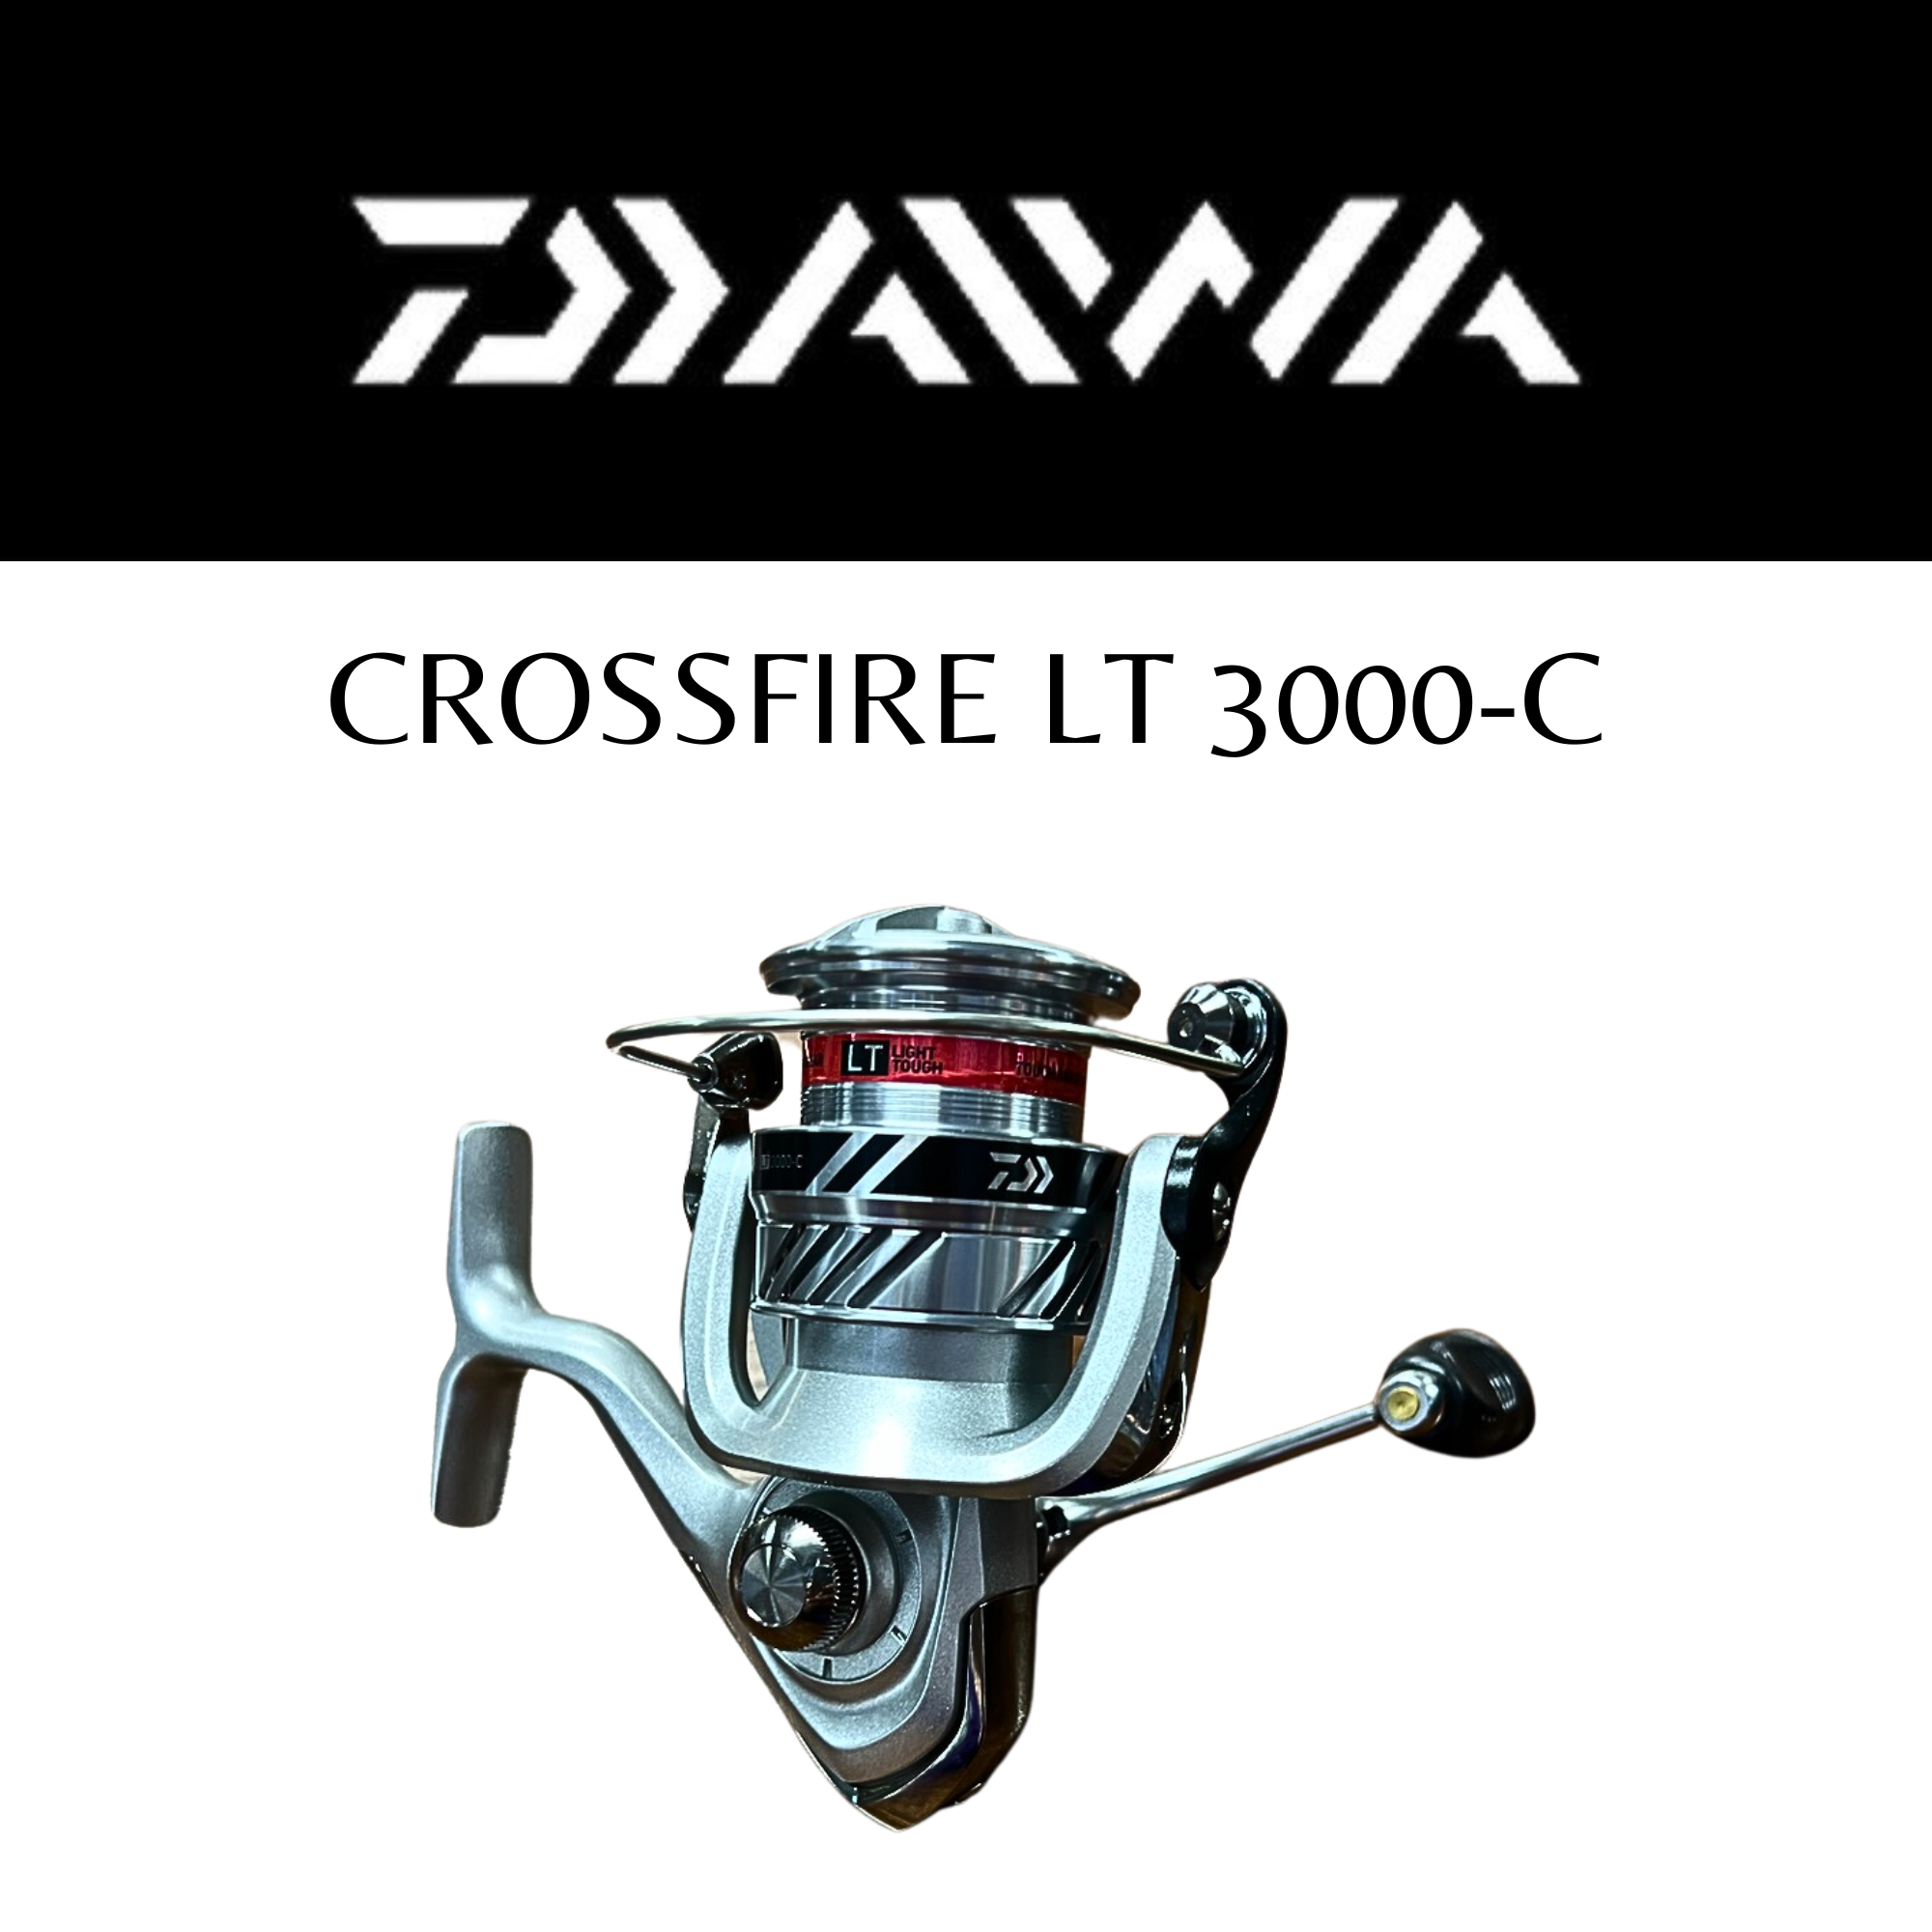 Crossfire LT 3000-C, Daiwa Spinning Fishing Reel, Fishing Store